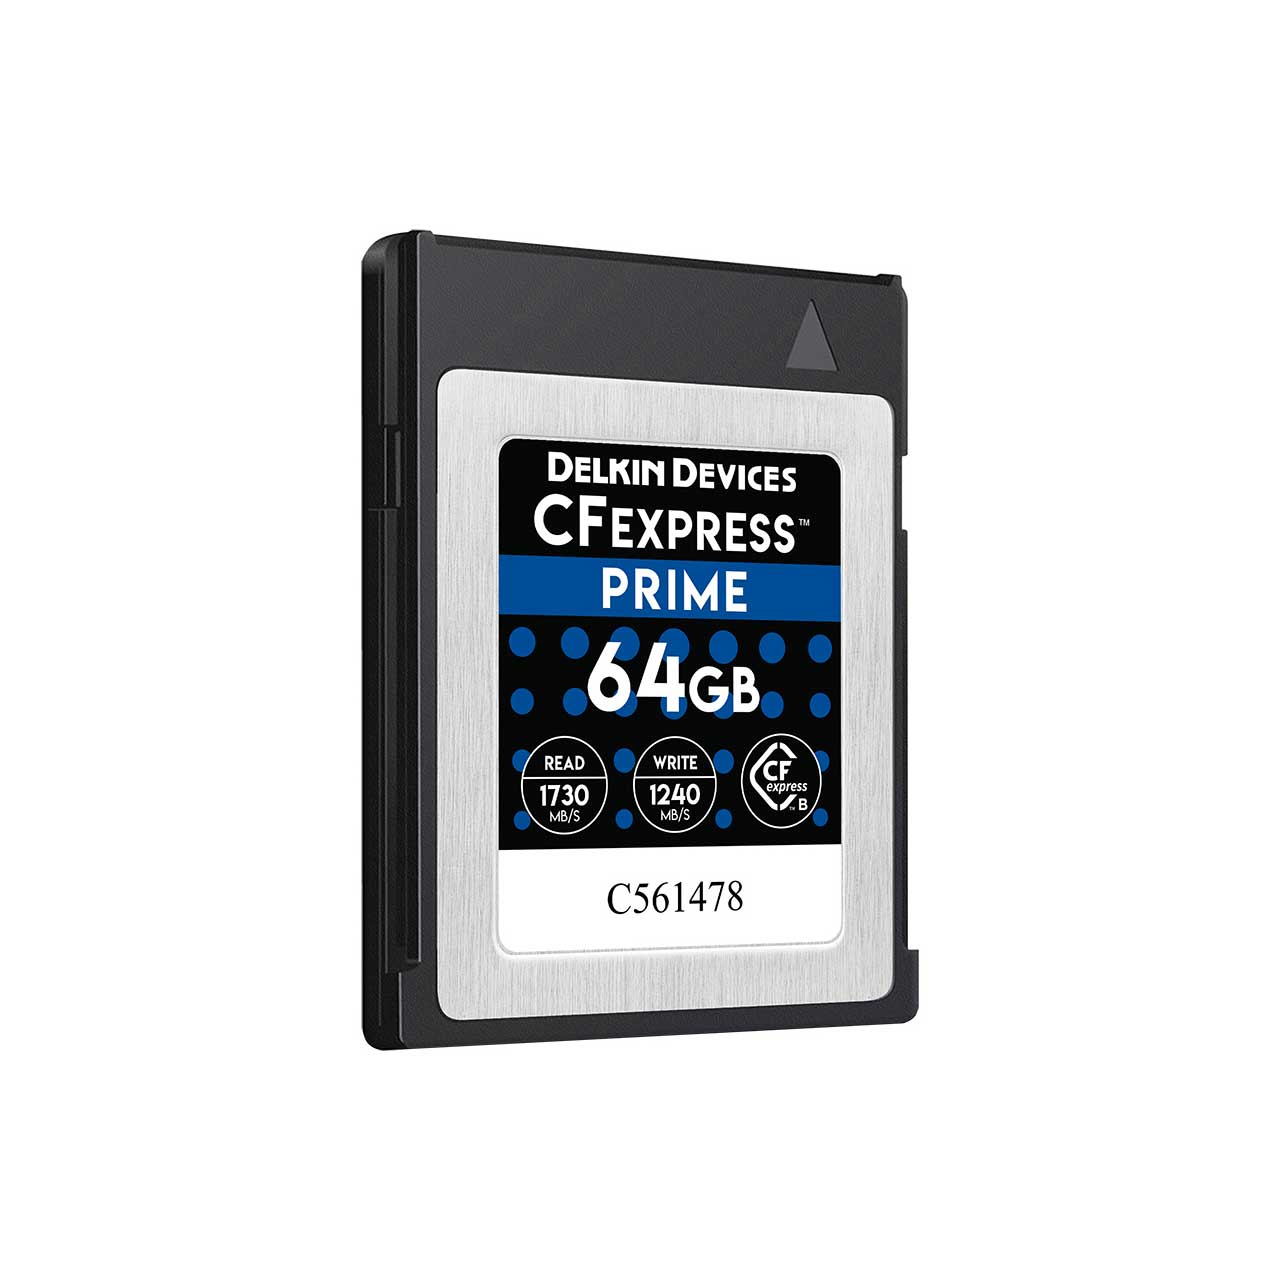 Delkin DCFX0-064 PRIME CFexpress Memory Card - 64GB  DELK-DCFX0-064